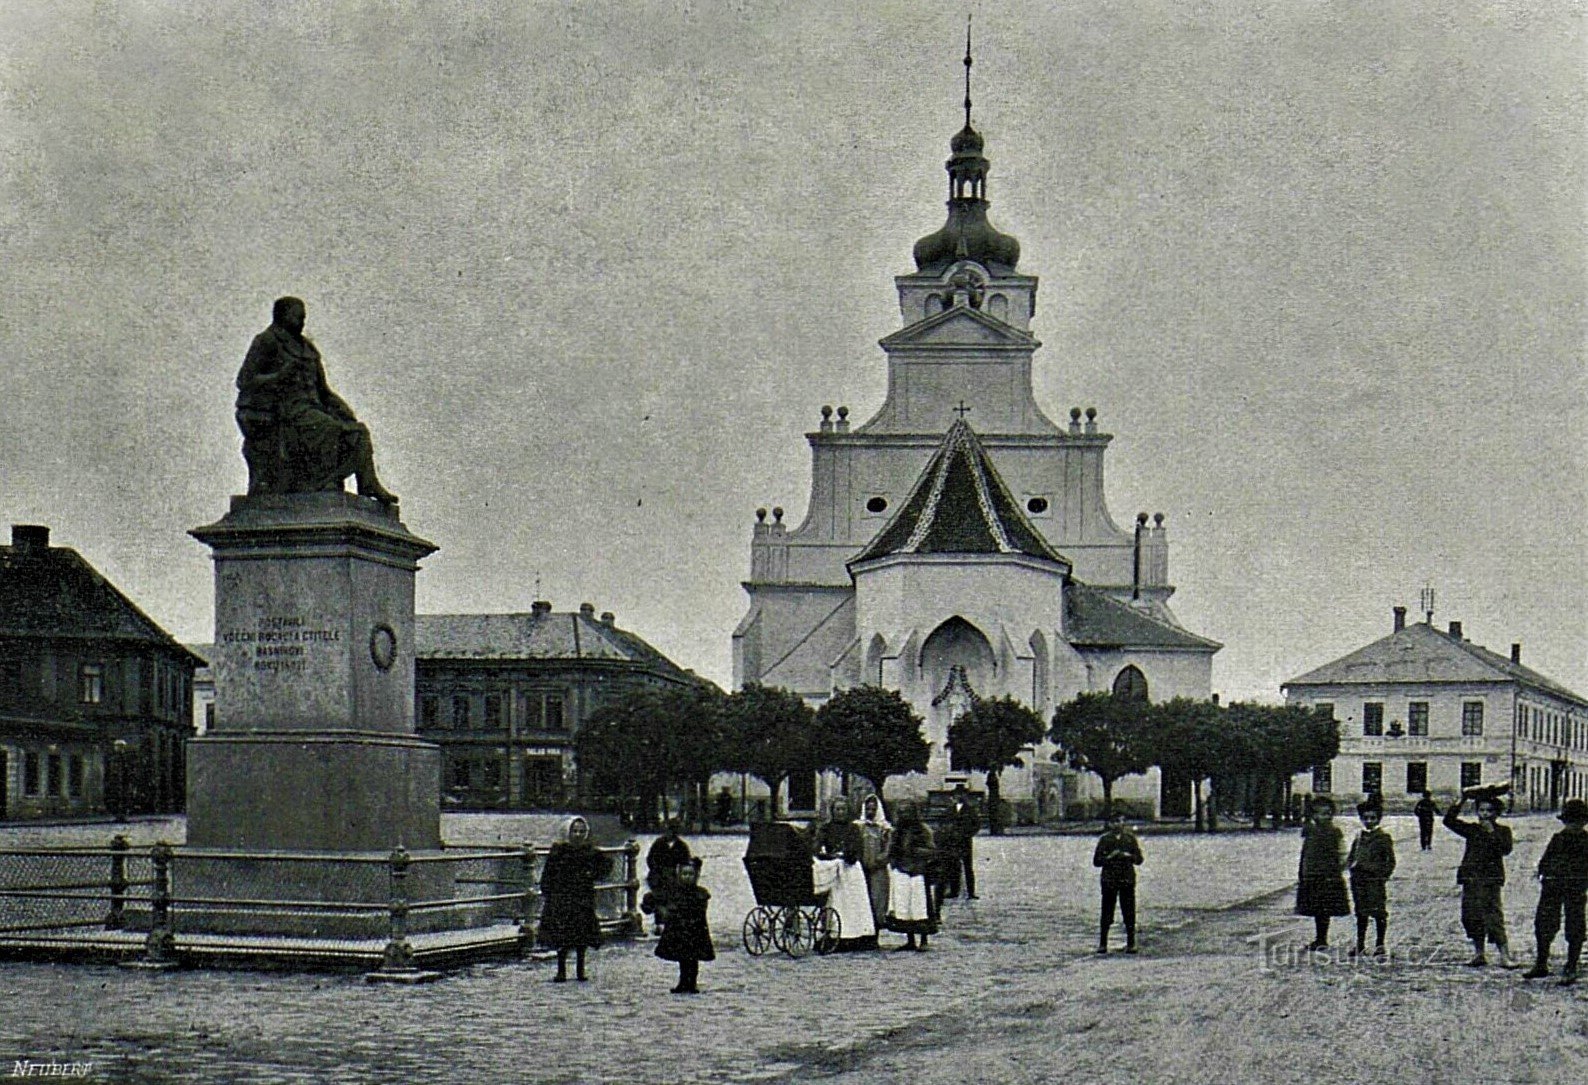 Chlumecké Klicperovo náměstí with the VK Klicpery monument in 1910